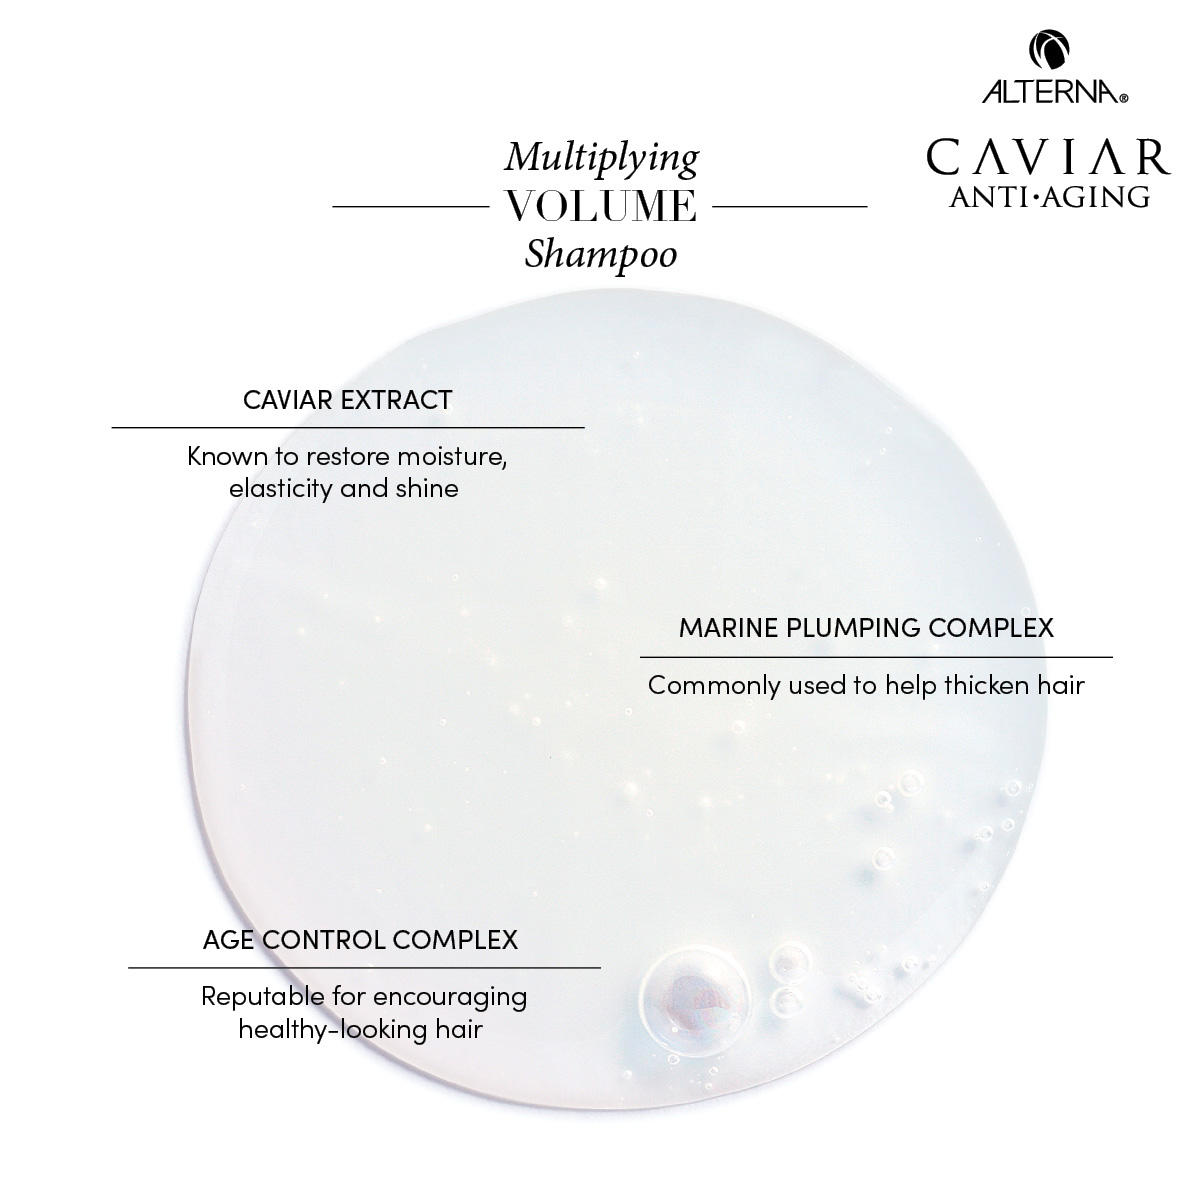 Alterna Caviar Anti-Aging Multiplying Volume Shampoo 250 ml - 4